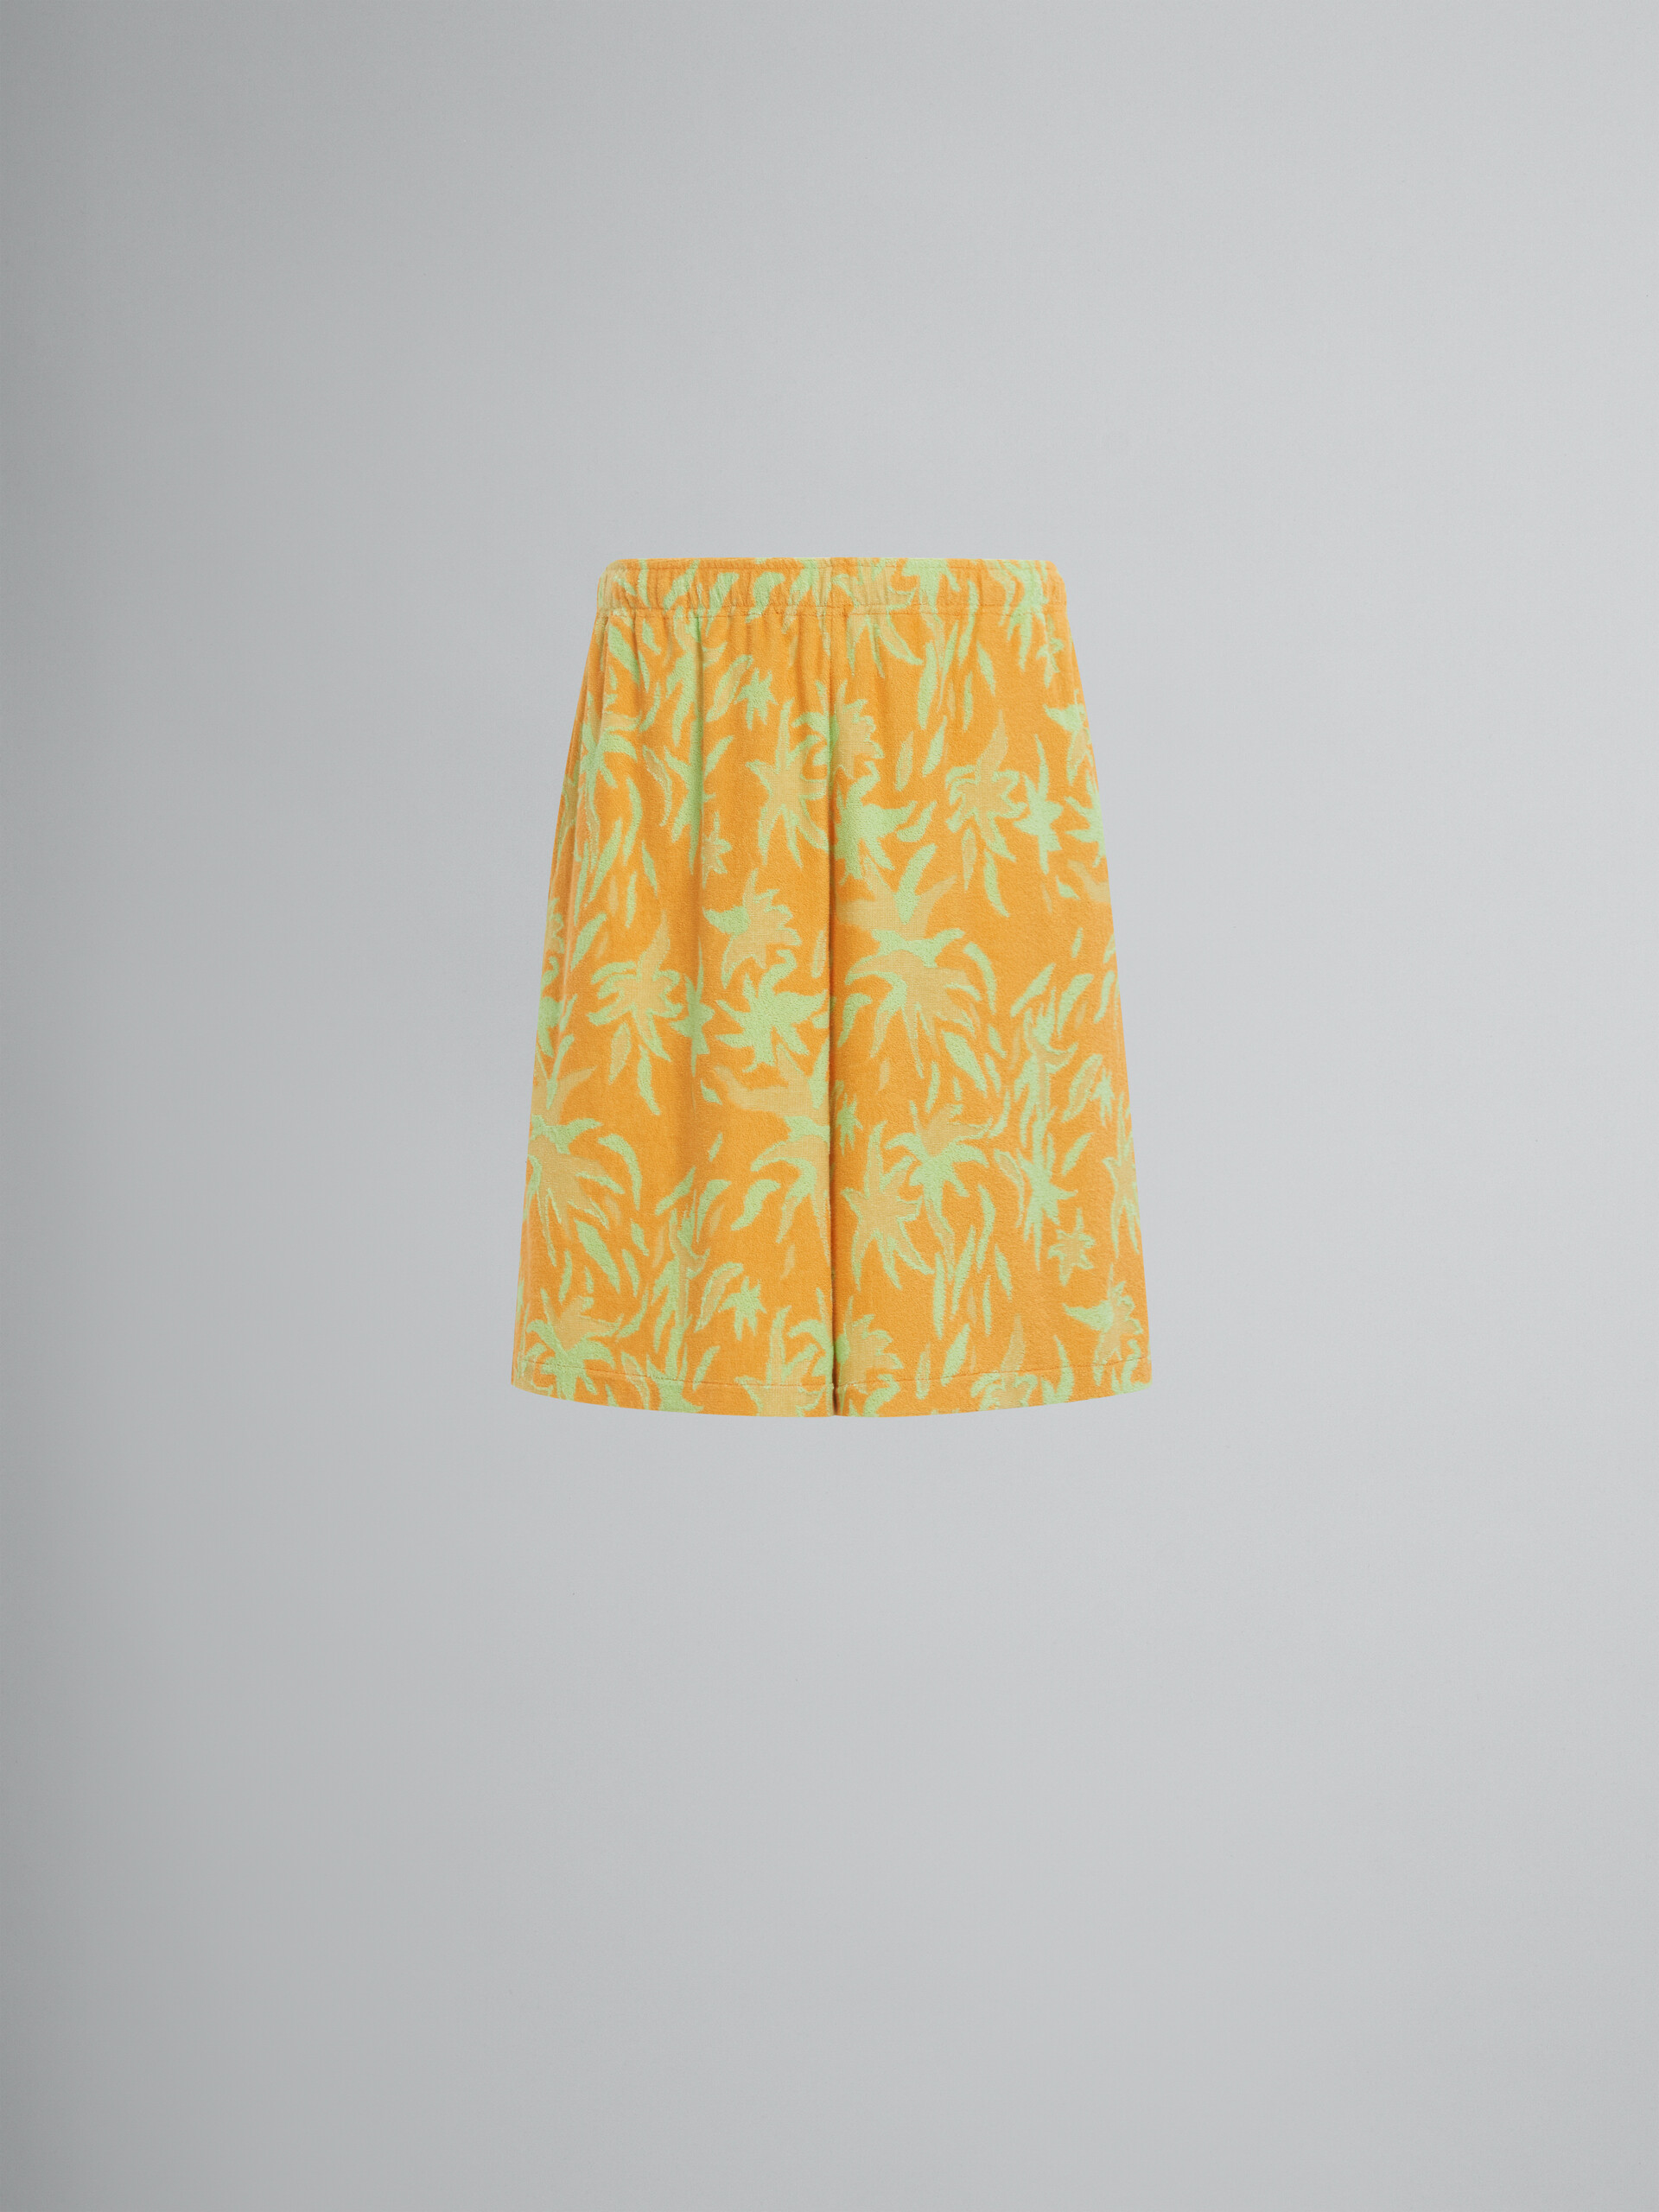 Marni x No Vacancy Inn - Orange jacquard sponge fabric shorts - Pants - Image 1